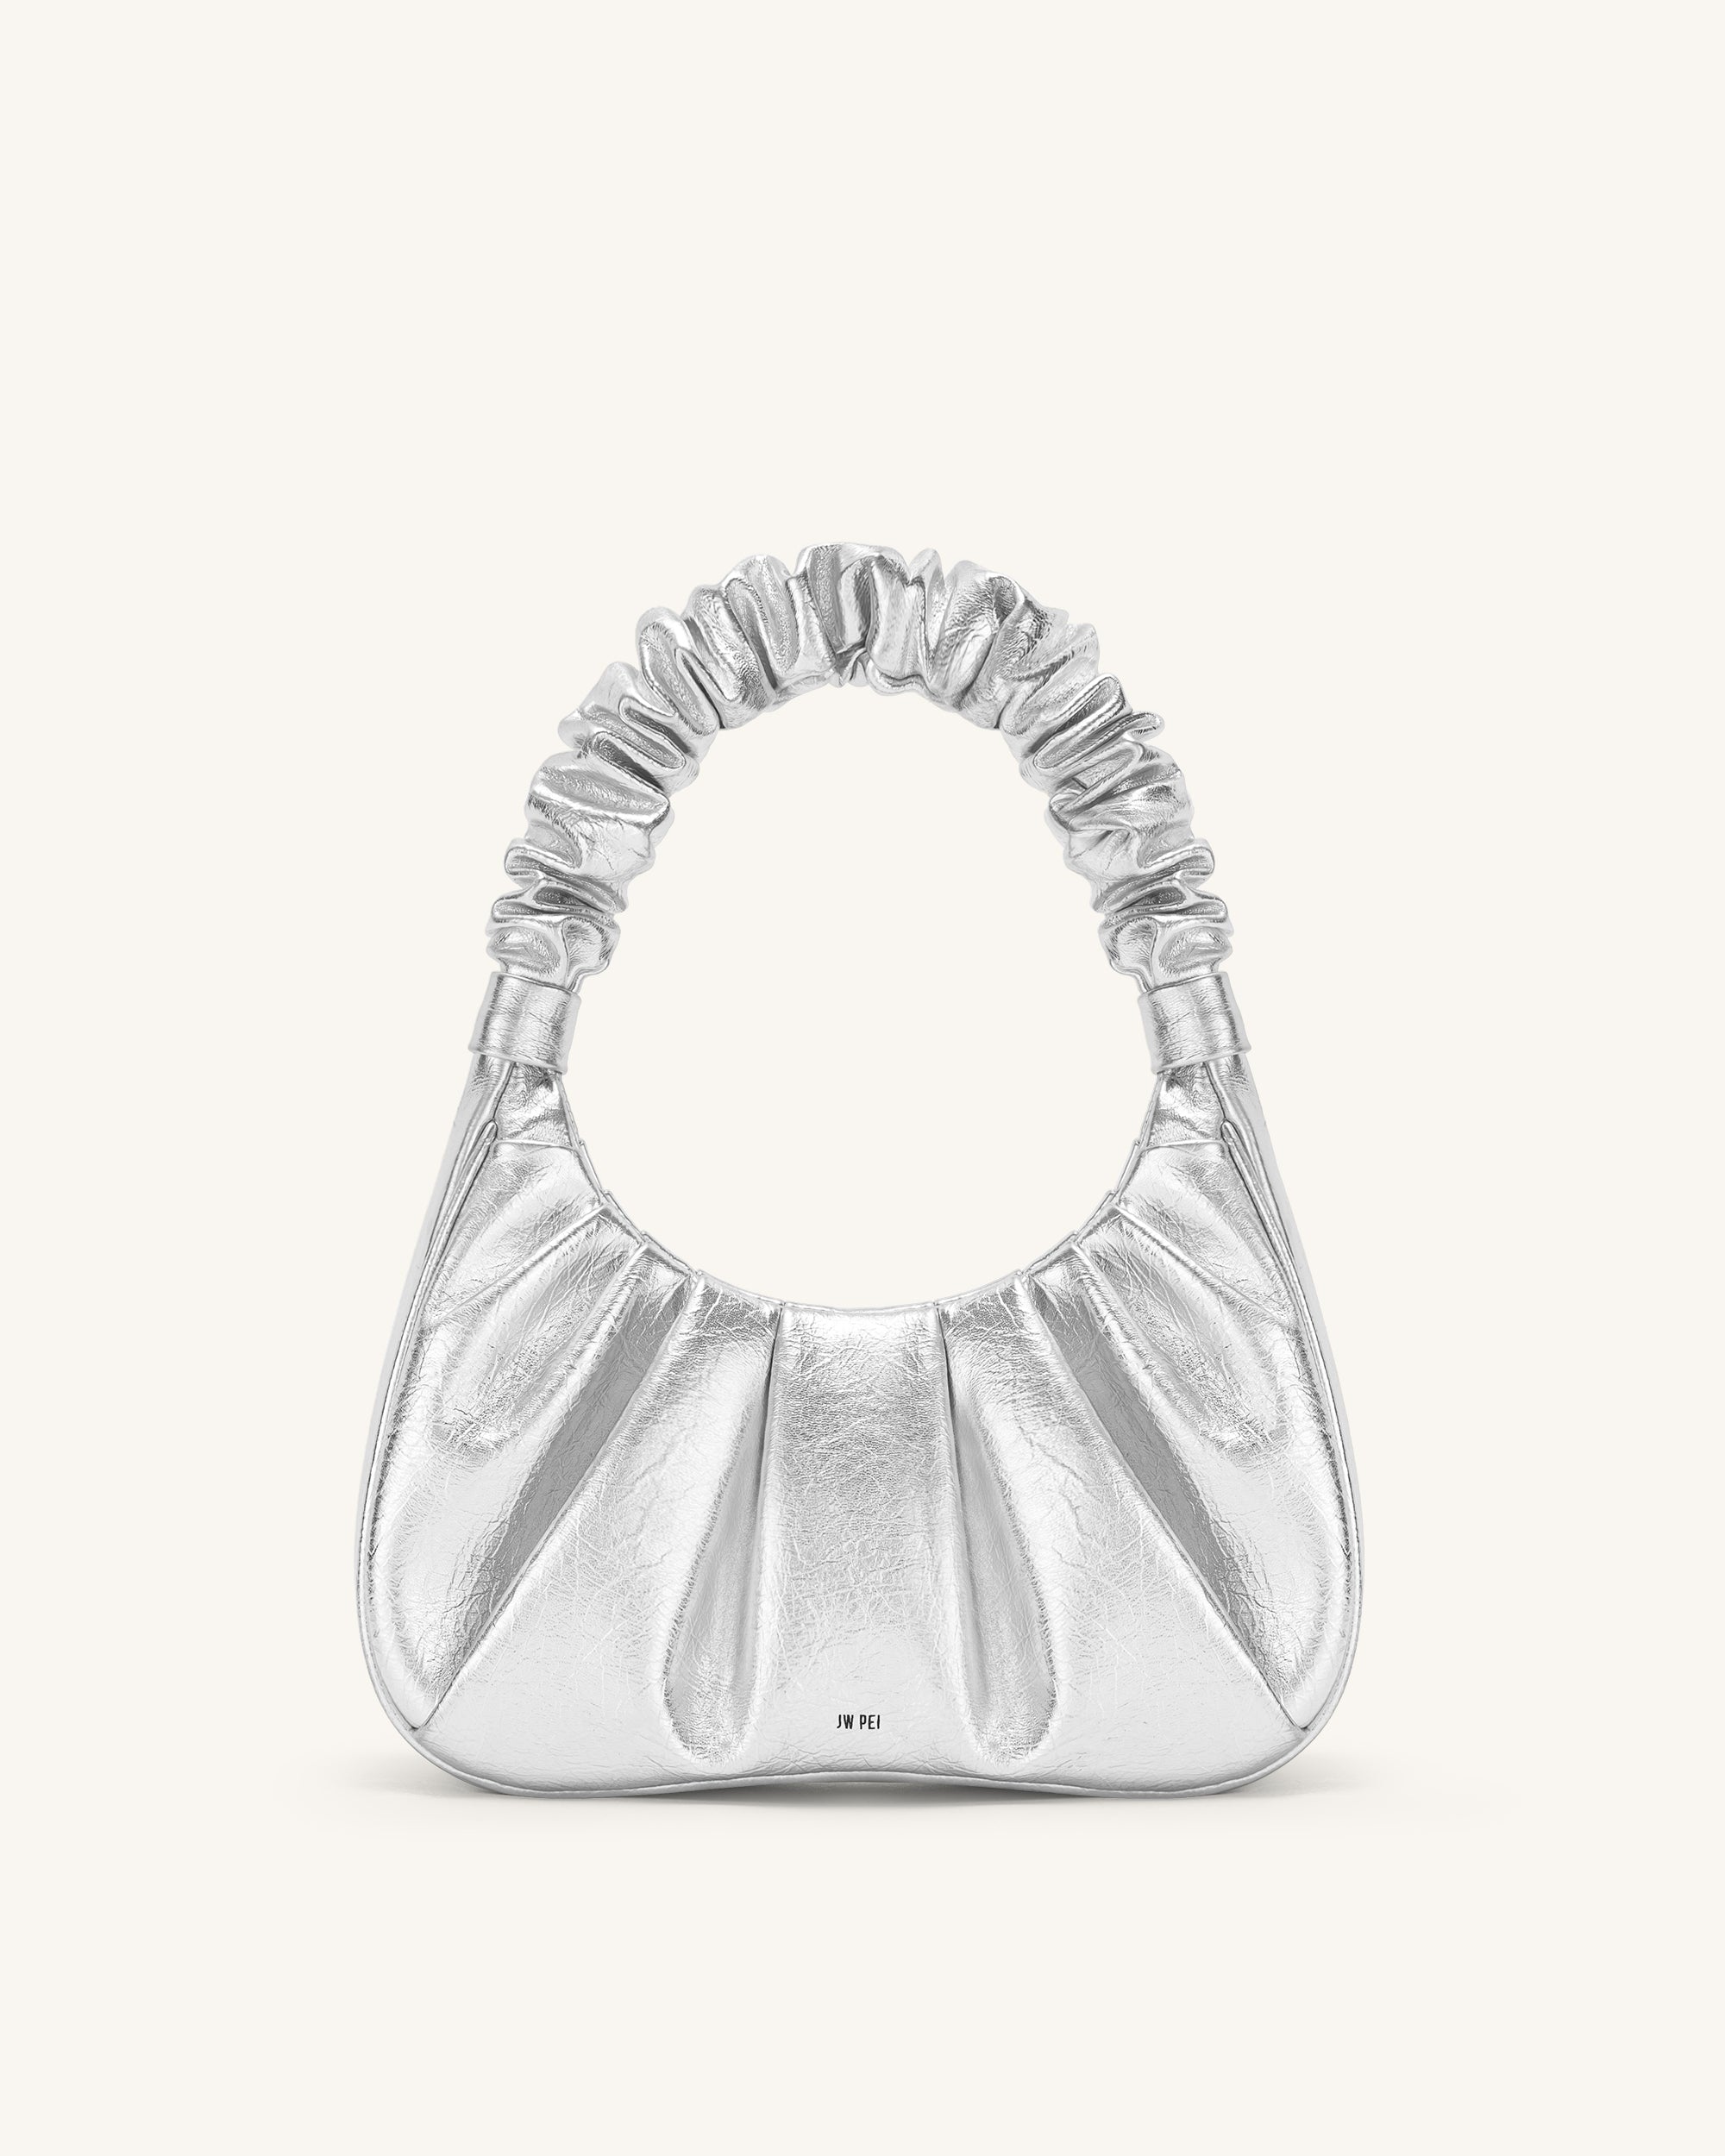 JW Pei Gabbi Ruched Hobo Handbag - Nutella Tan - $80 (10% Off Retail) New  With Tags - From Mooshkini